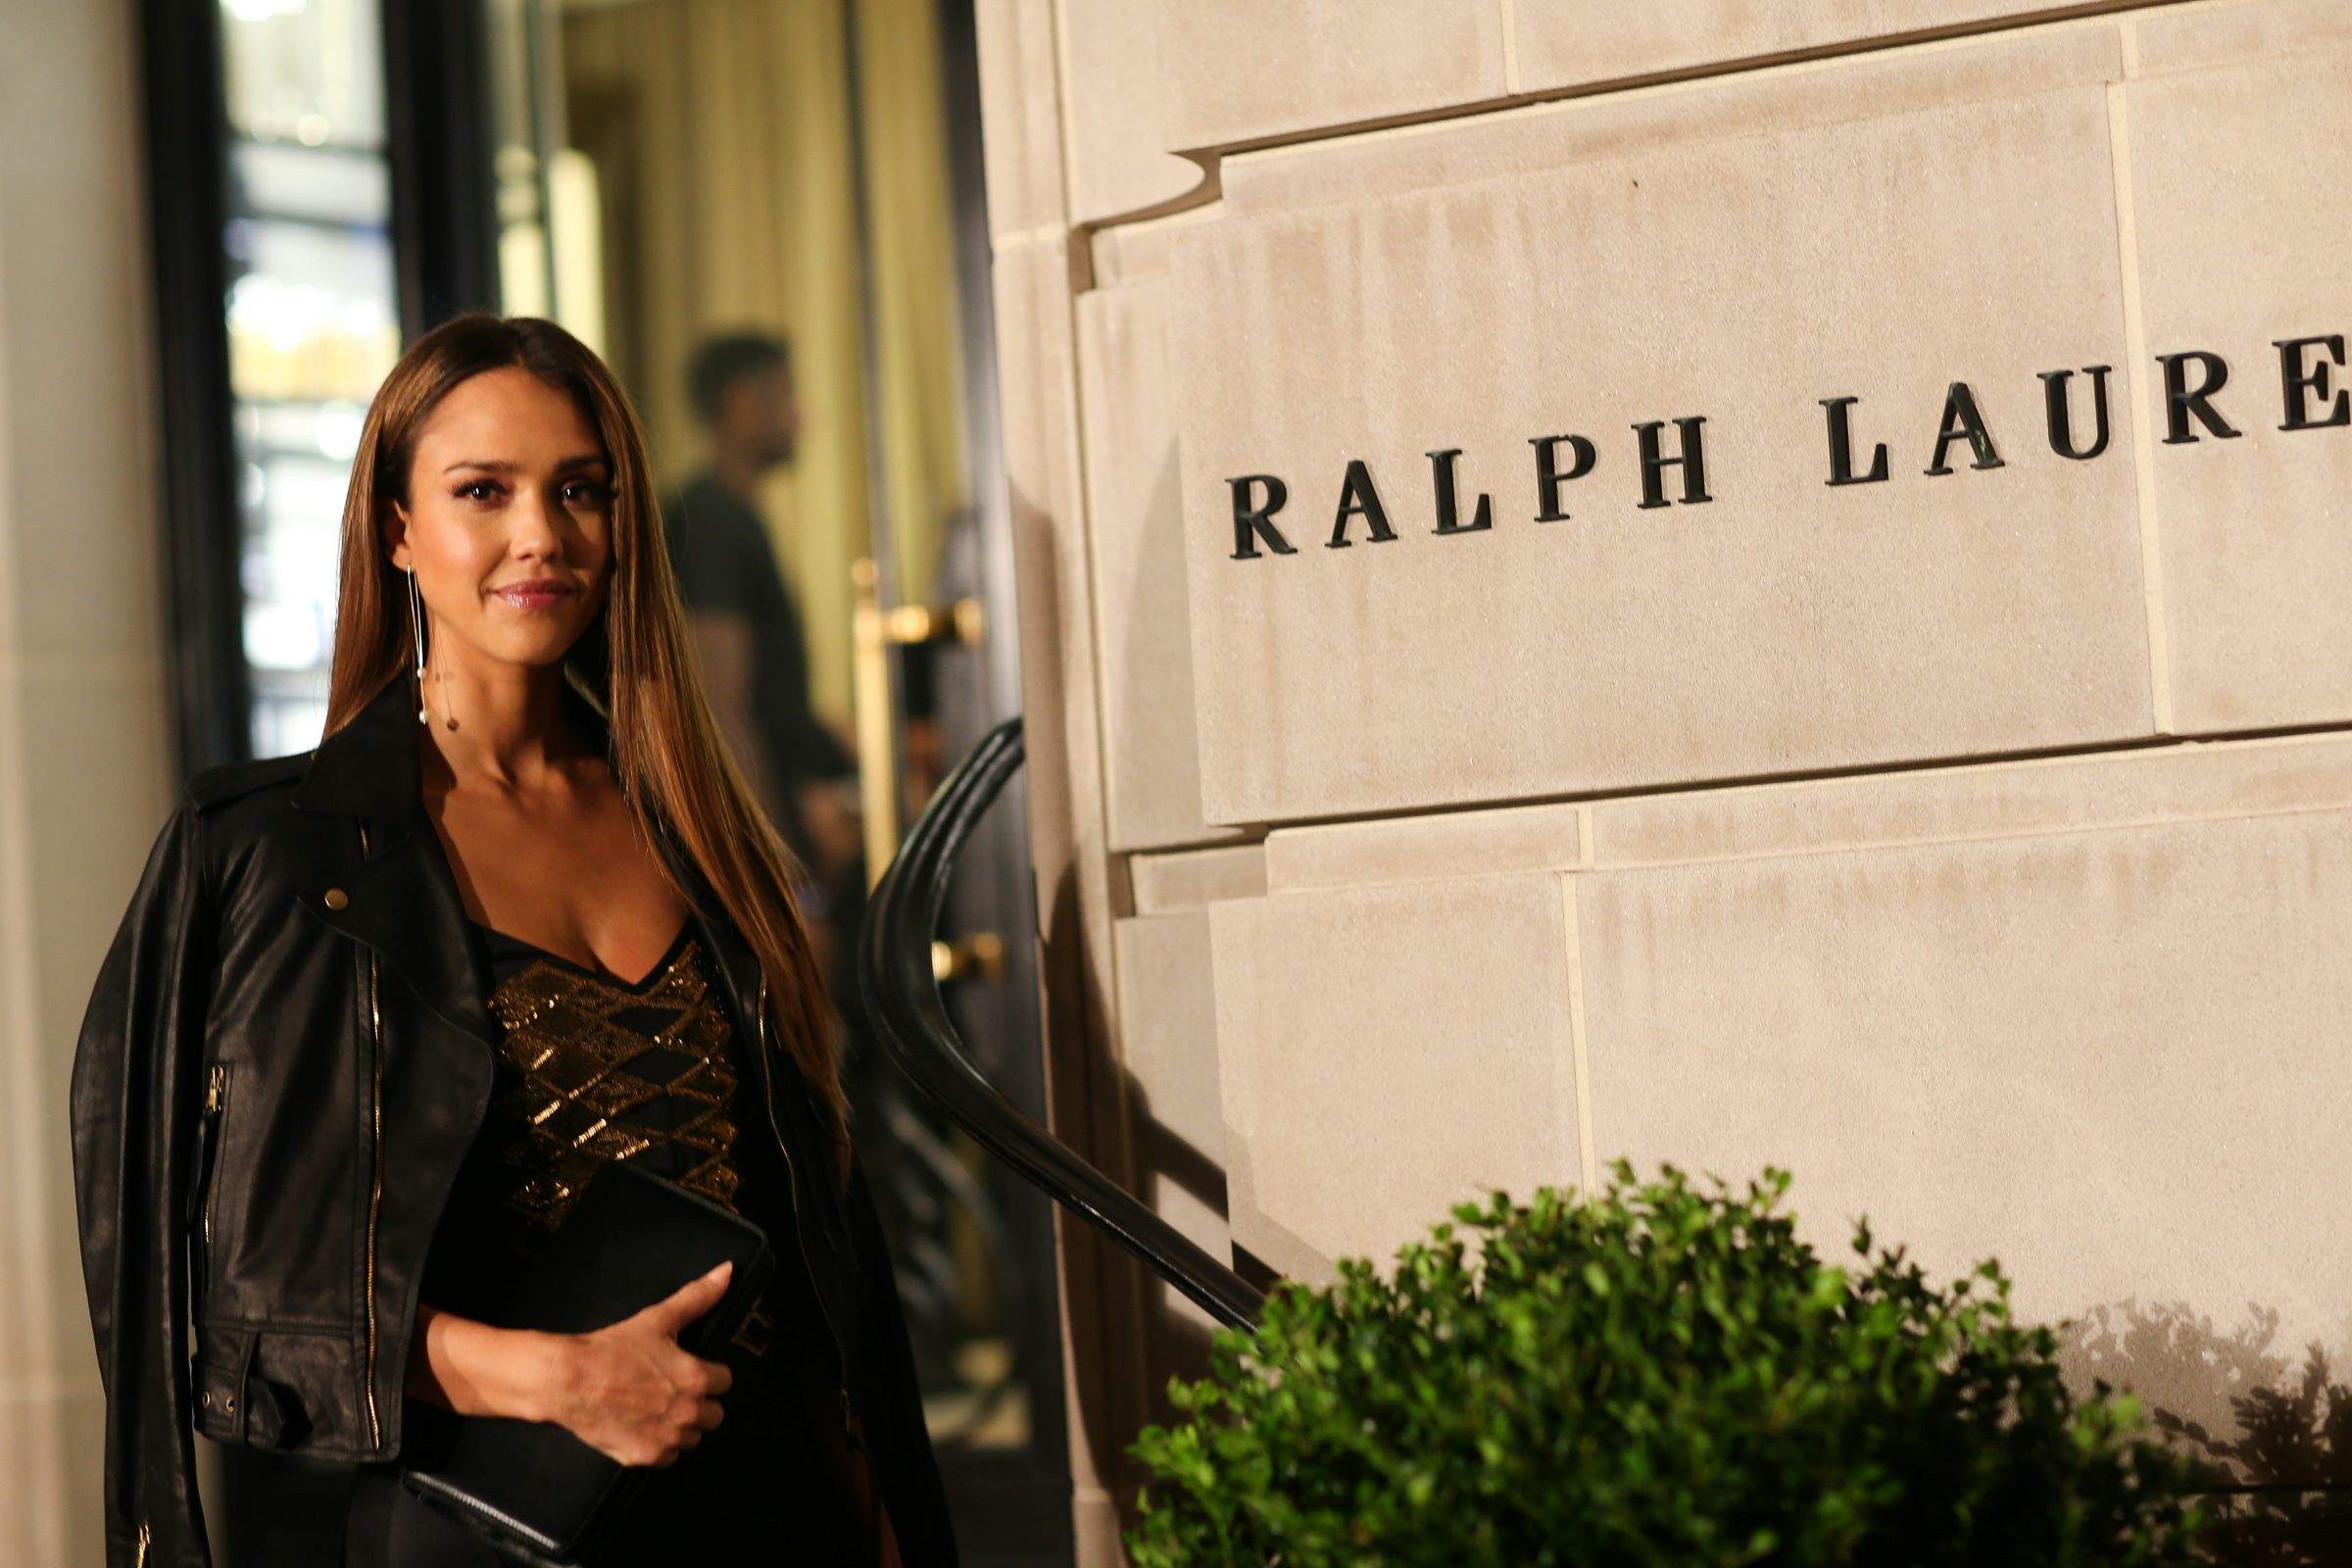 Jessica Alba attends Ralph Lauren fashion show